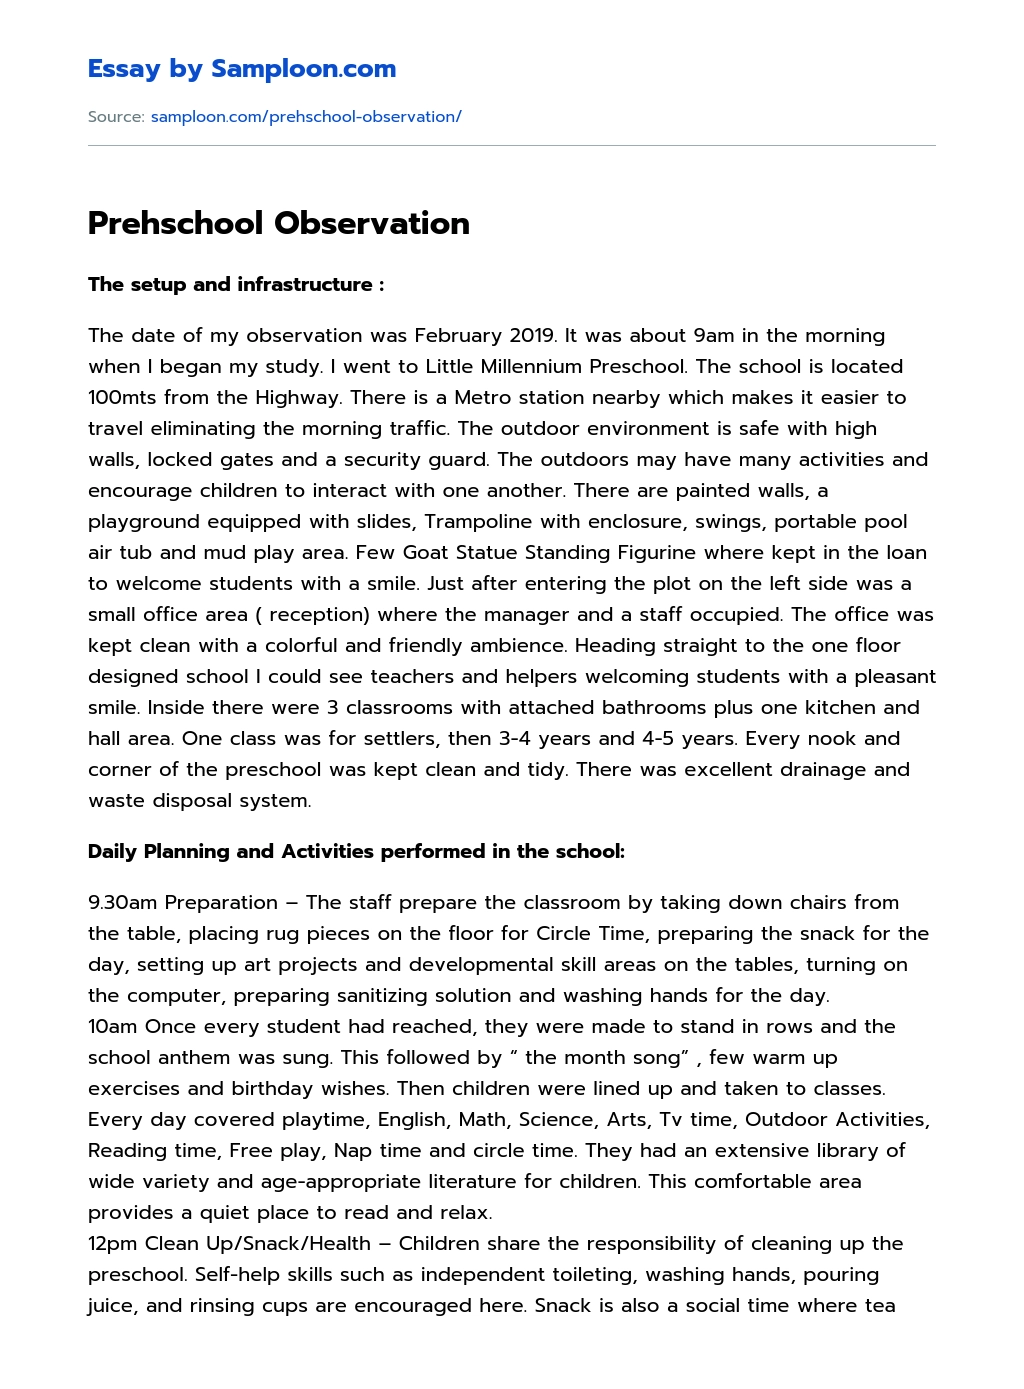 Prehschool Observation essay